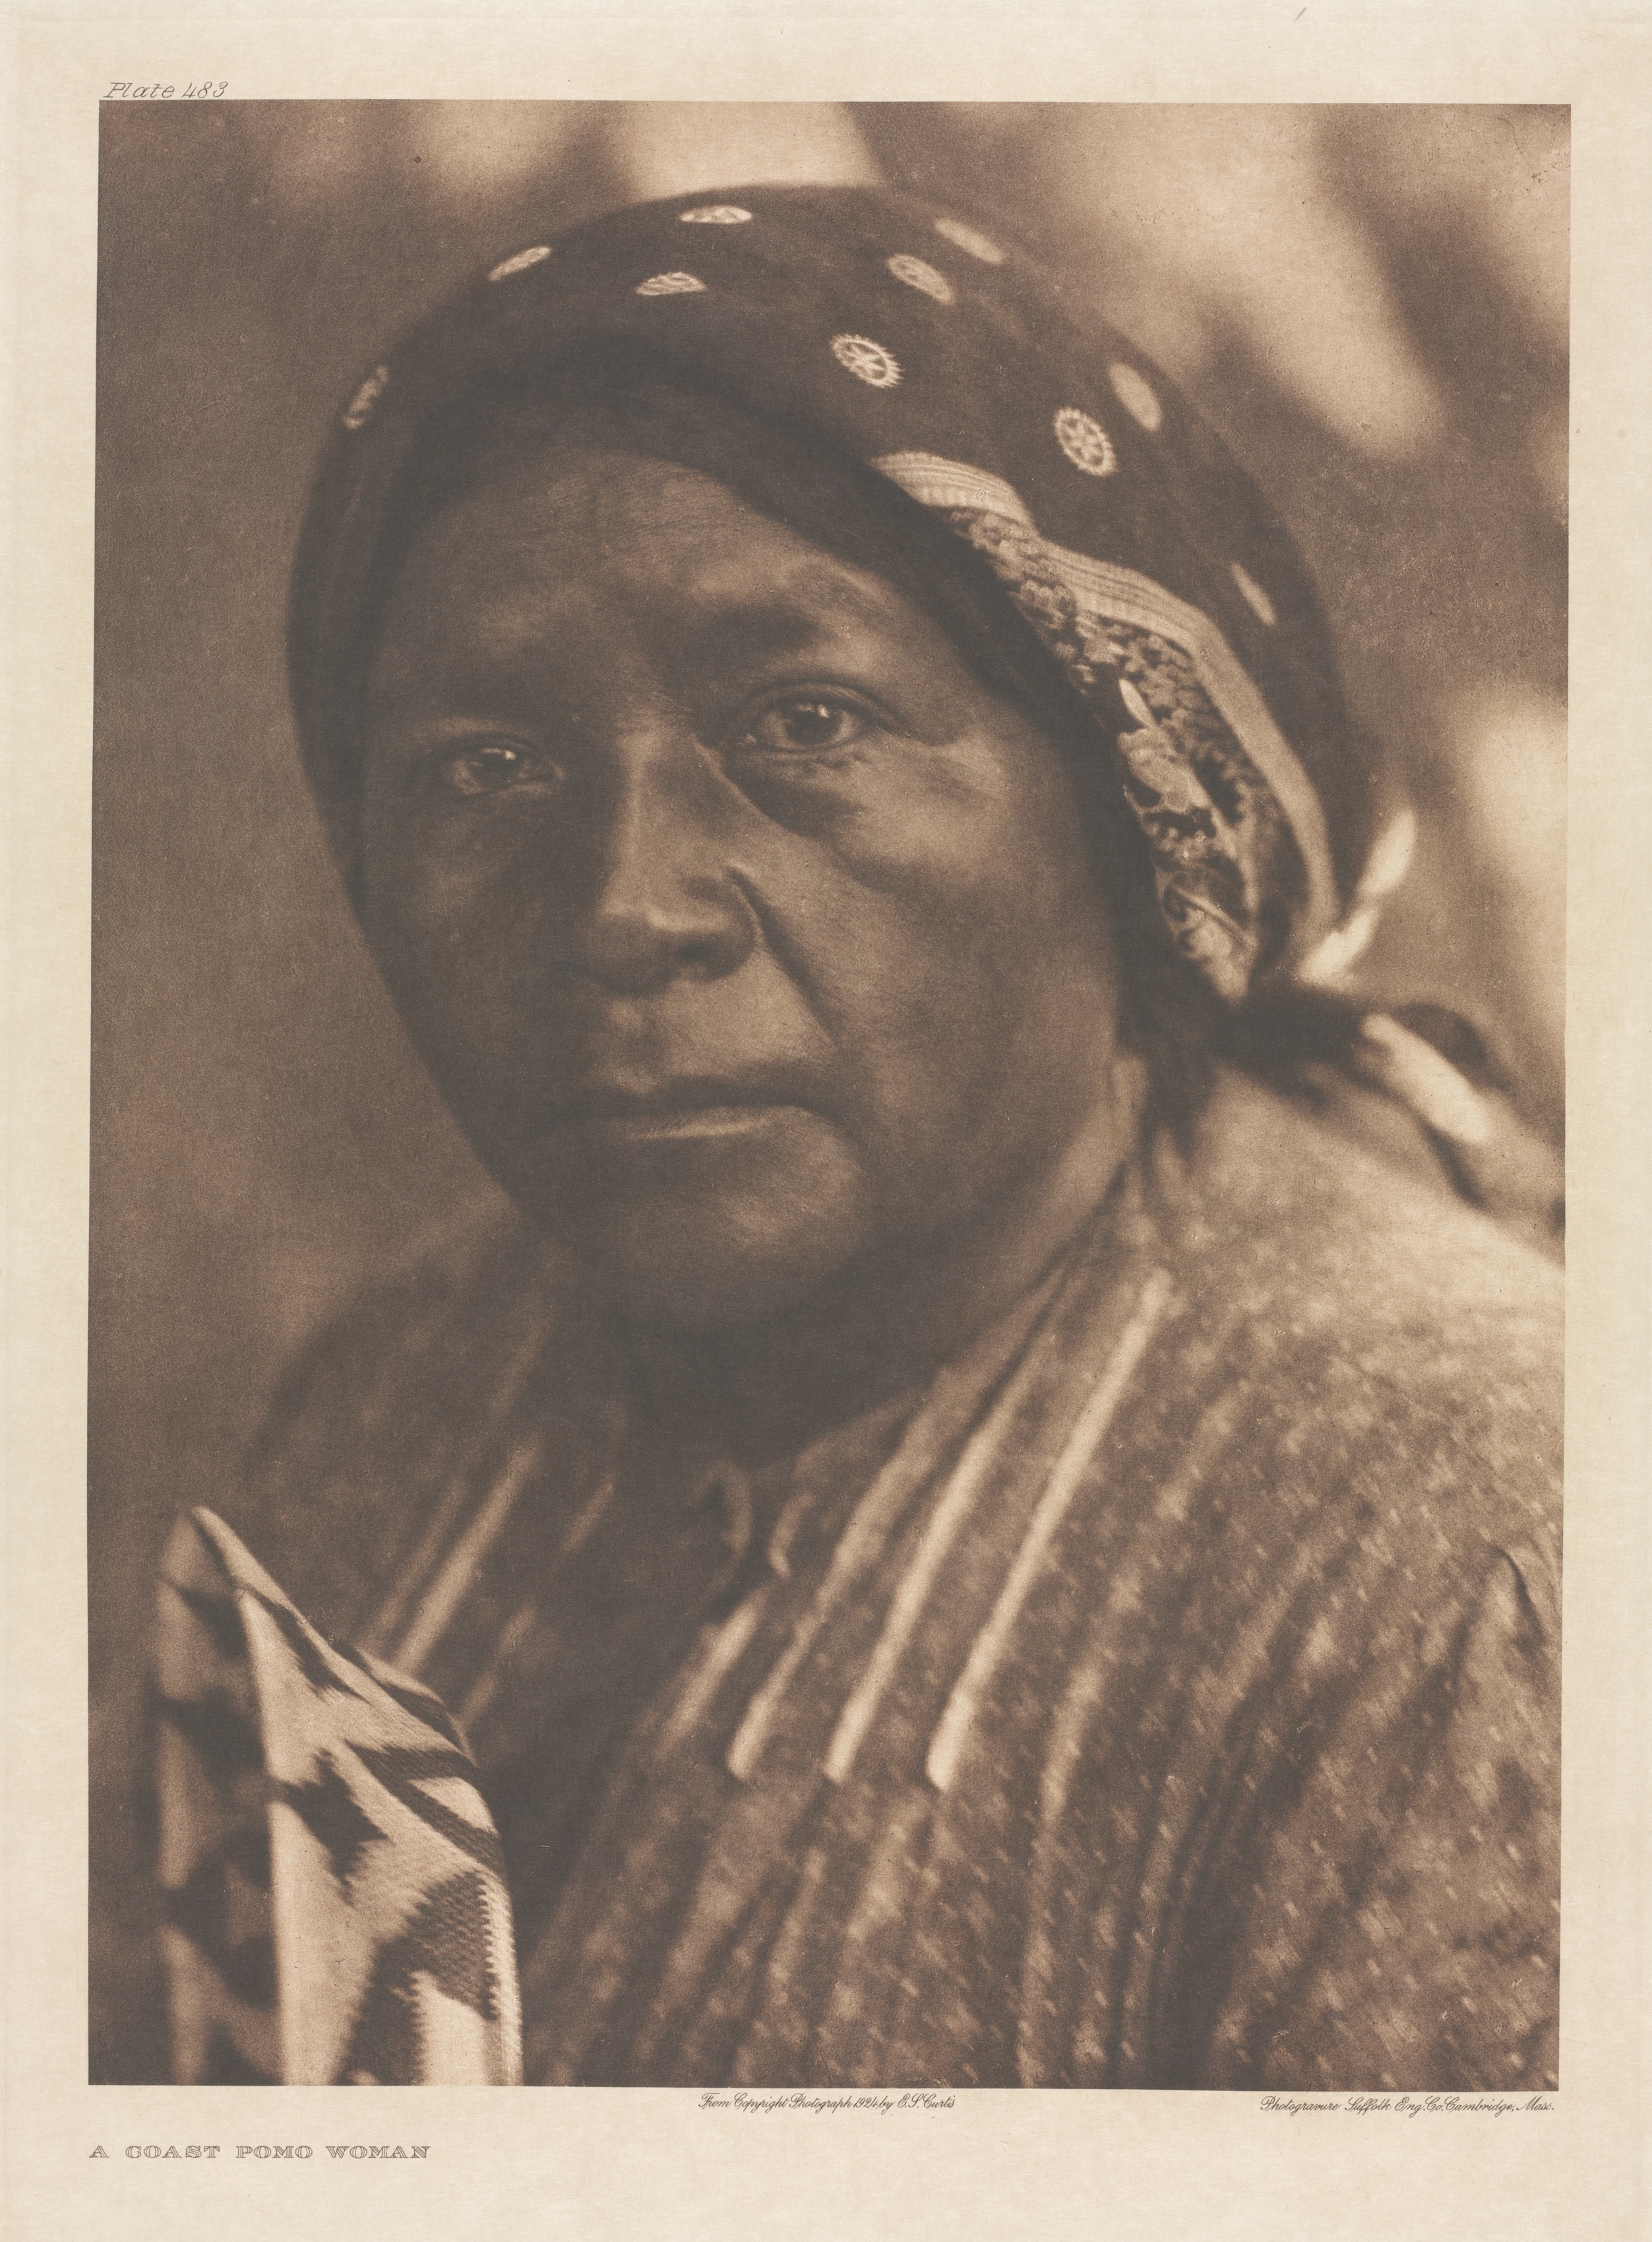 Portfolio XIV, Plate 483: A Coast Pomo Woman